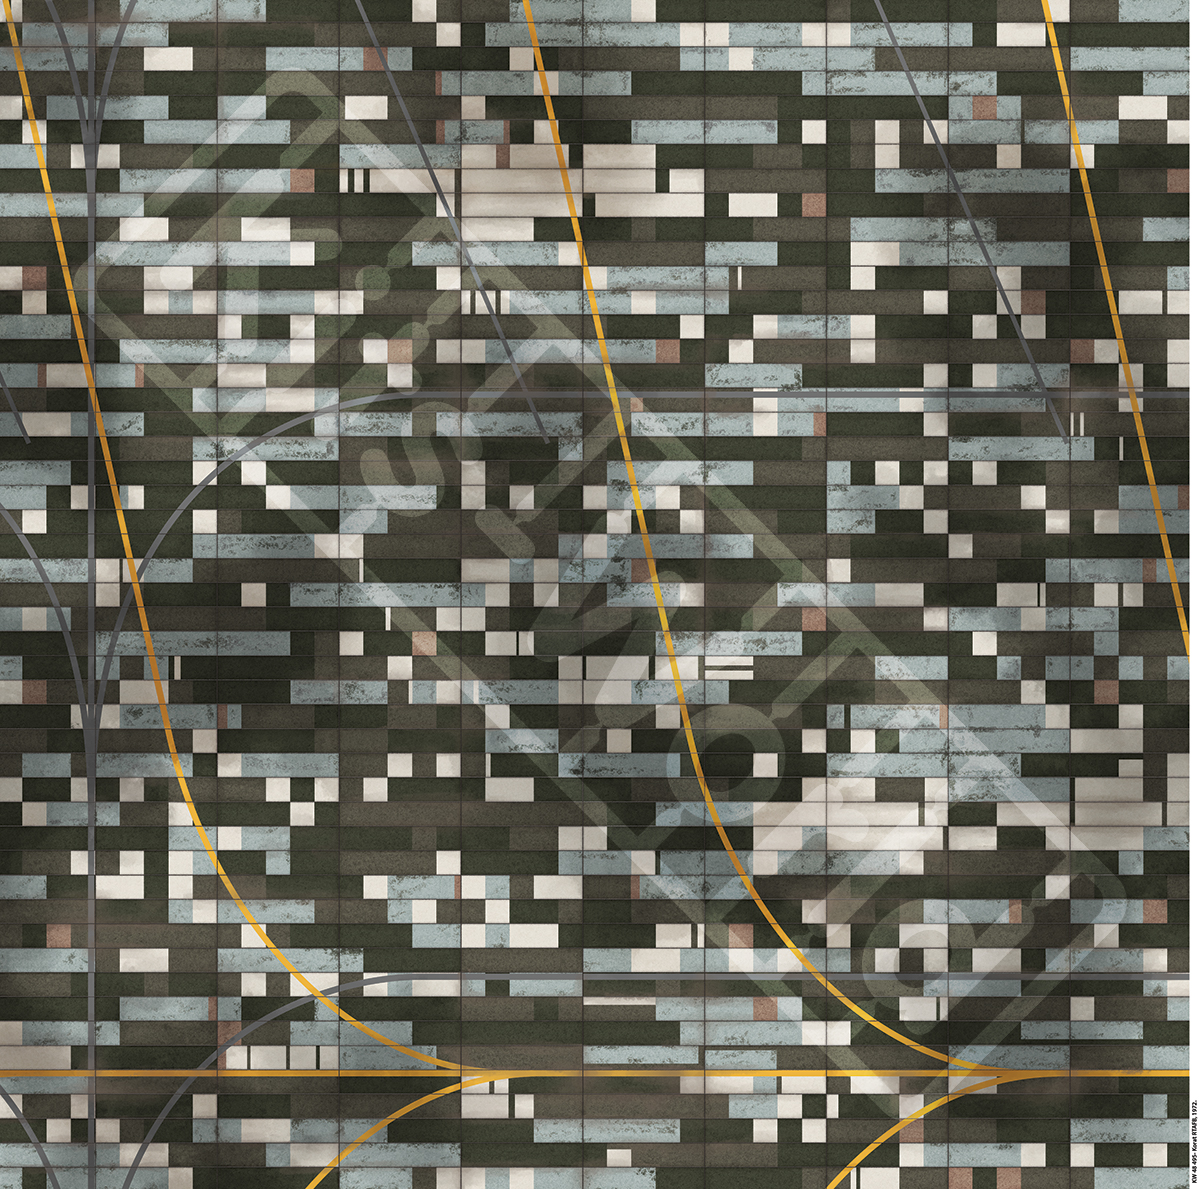 Kitsworld Diorama Adhesive Base 1:48th scale - Korat RTAFB- 1972 KWB 48-495 Korat RTAFB, 1972 GPS- 14º55’47.83” N  102º04’45.01” E (General location) 